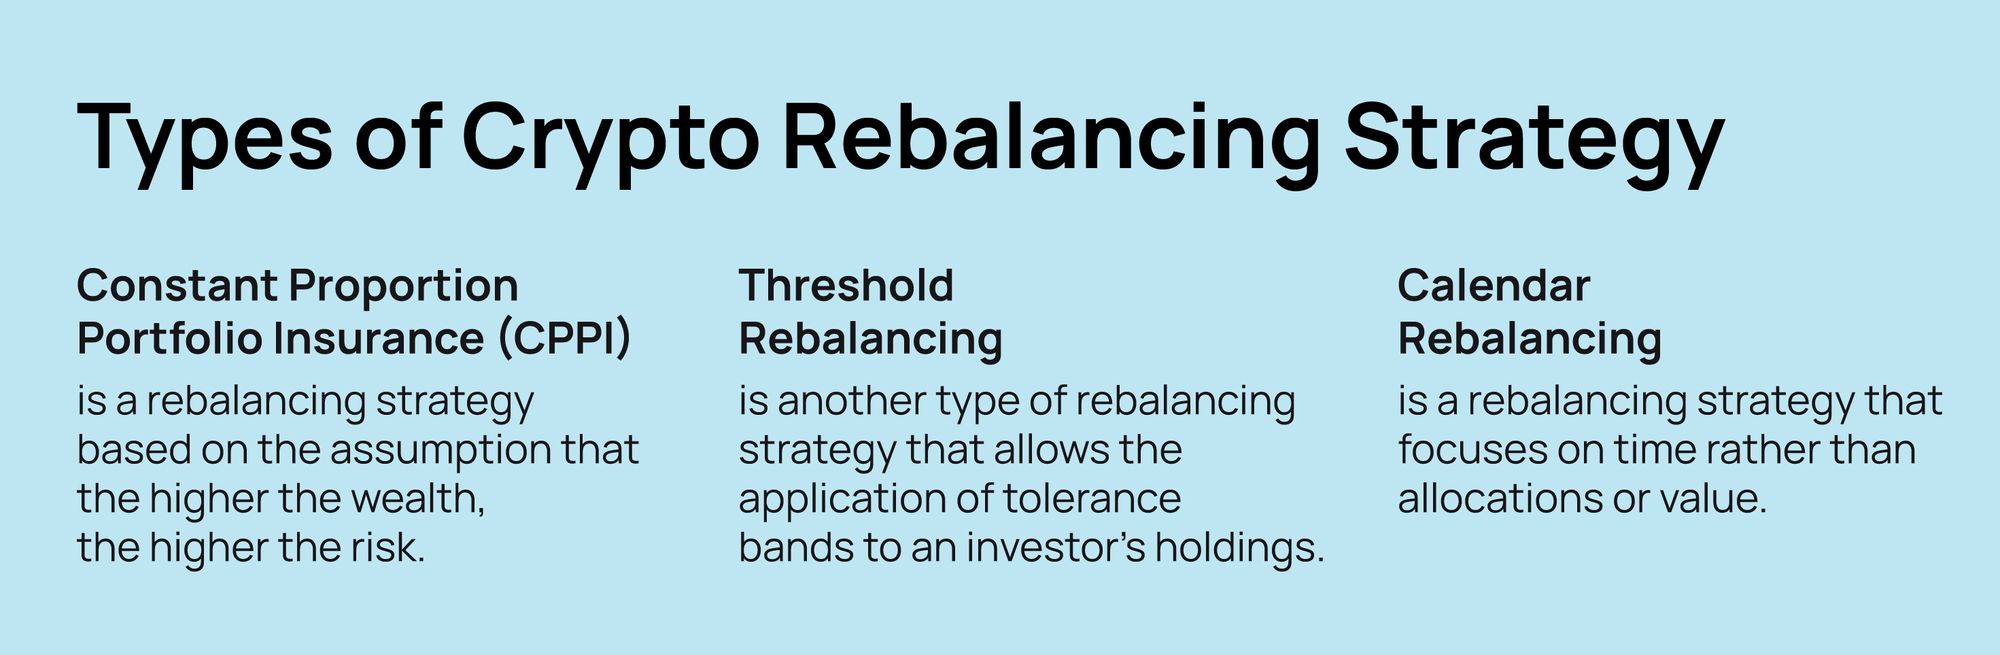 Types of Crypto Rebalancing Strategy